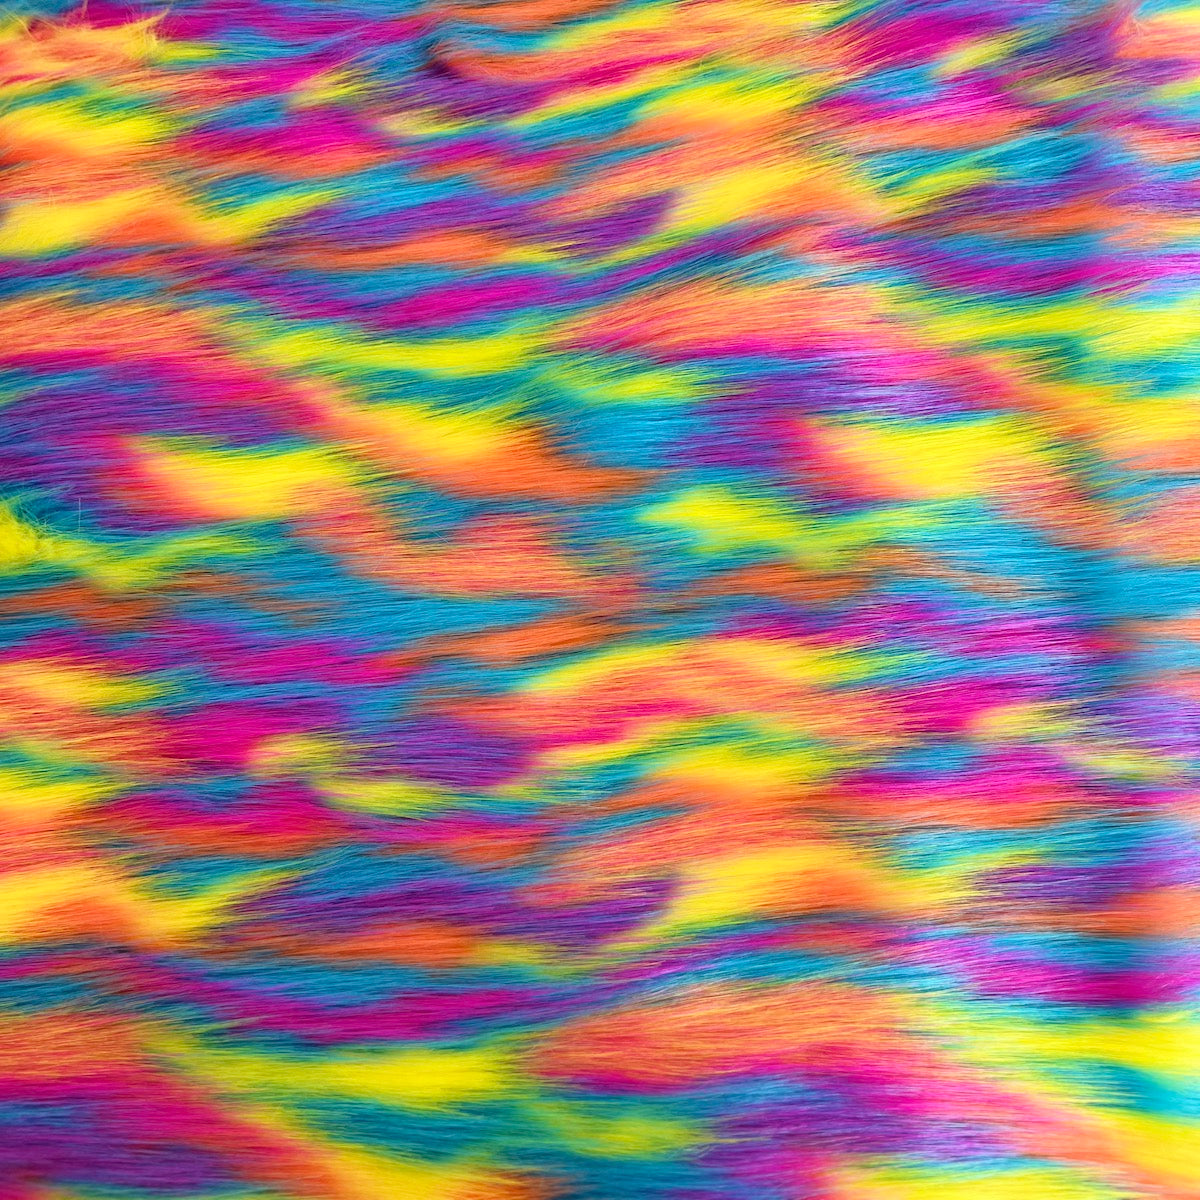 Tela de piel sintética de pelo largo Ysidro multicolor arcoíris 